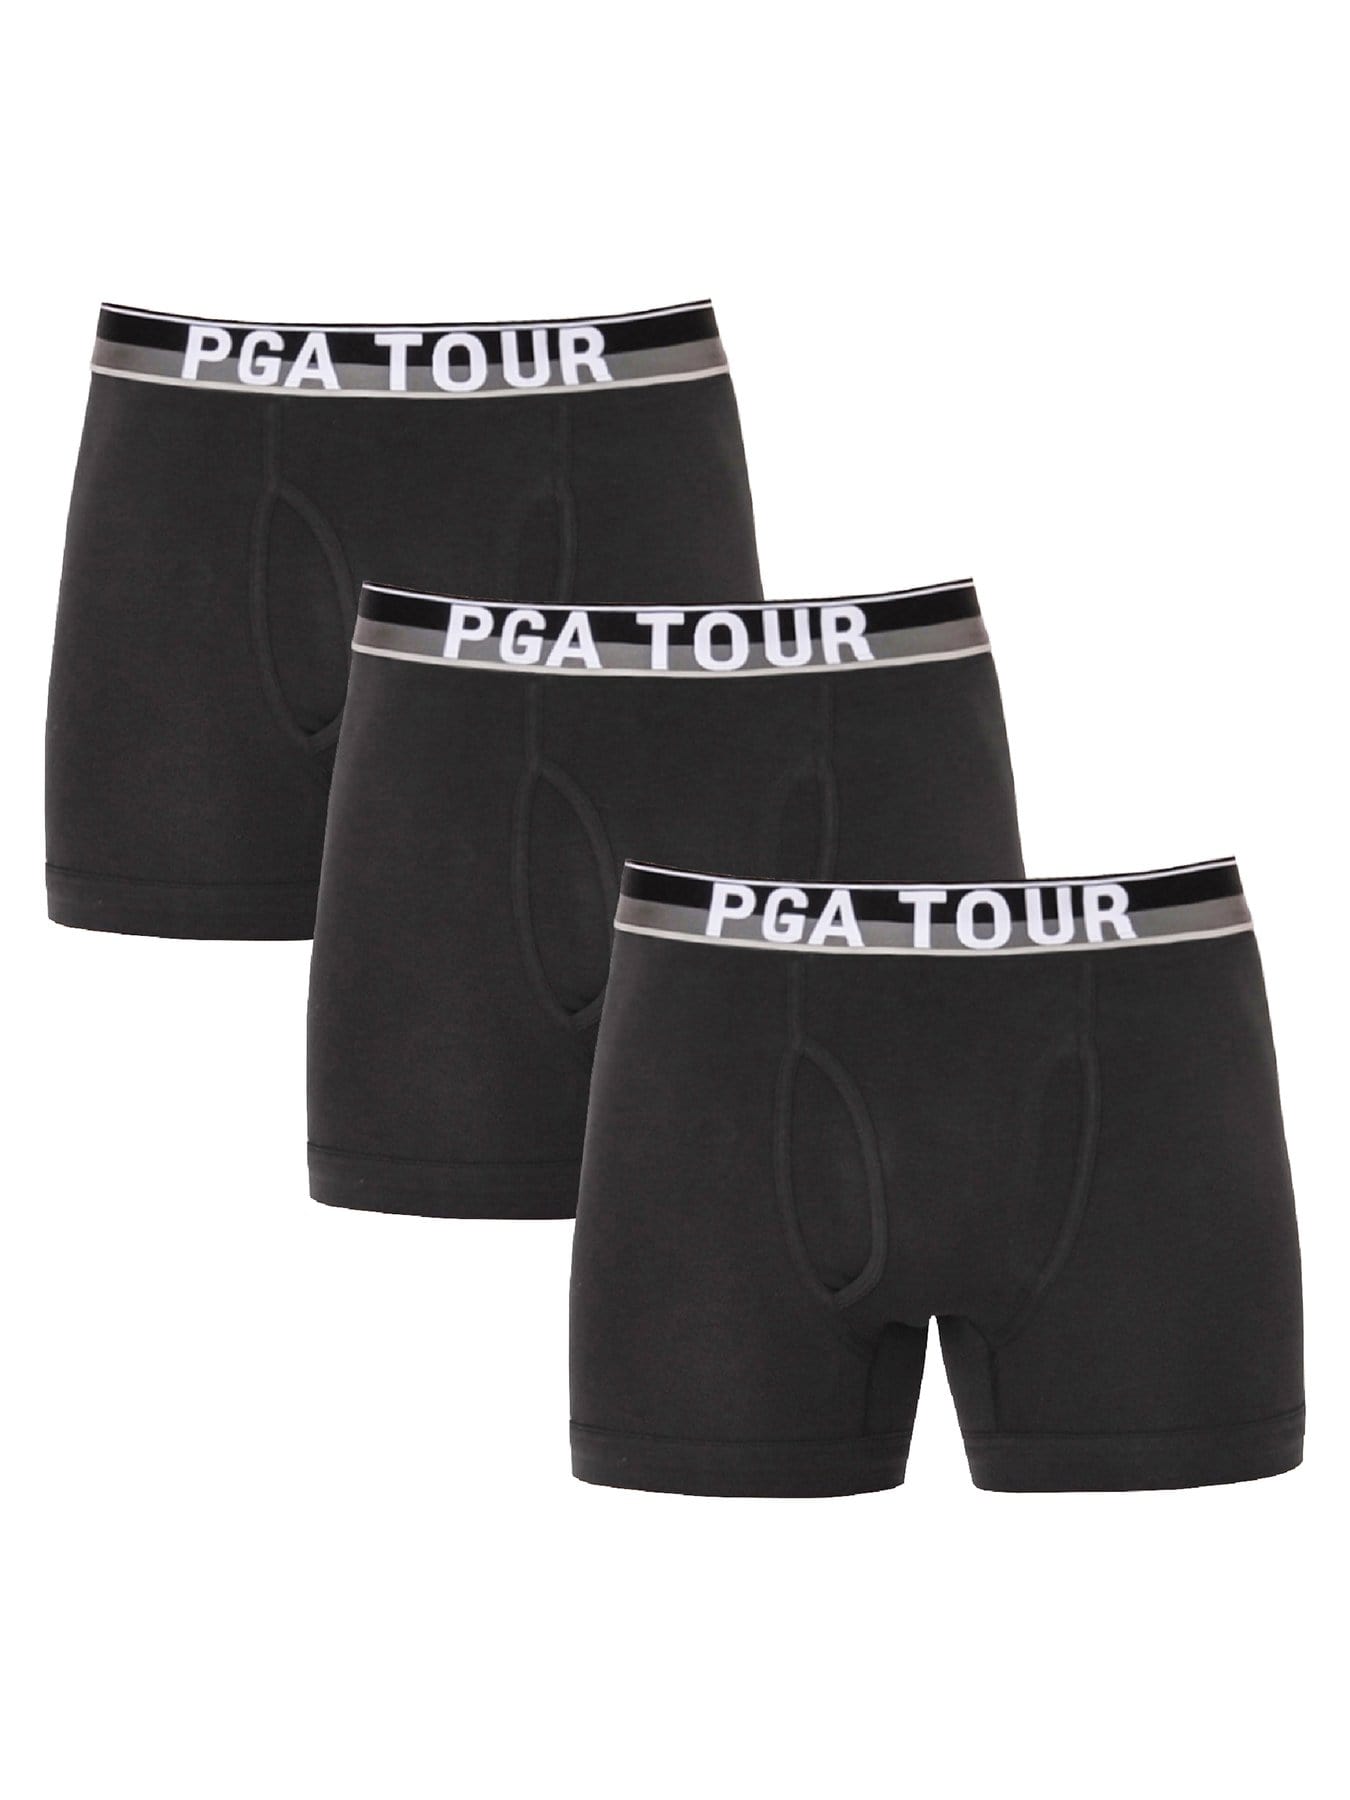 PGA TOUR Apparel Mens Boxer Brief Underwear (3-Pack), Size Small, Black/Black/Black, Cotton/Spandex | Golf Apparel Shop